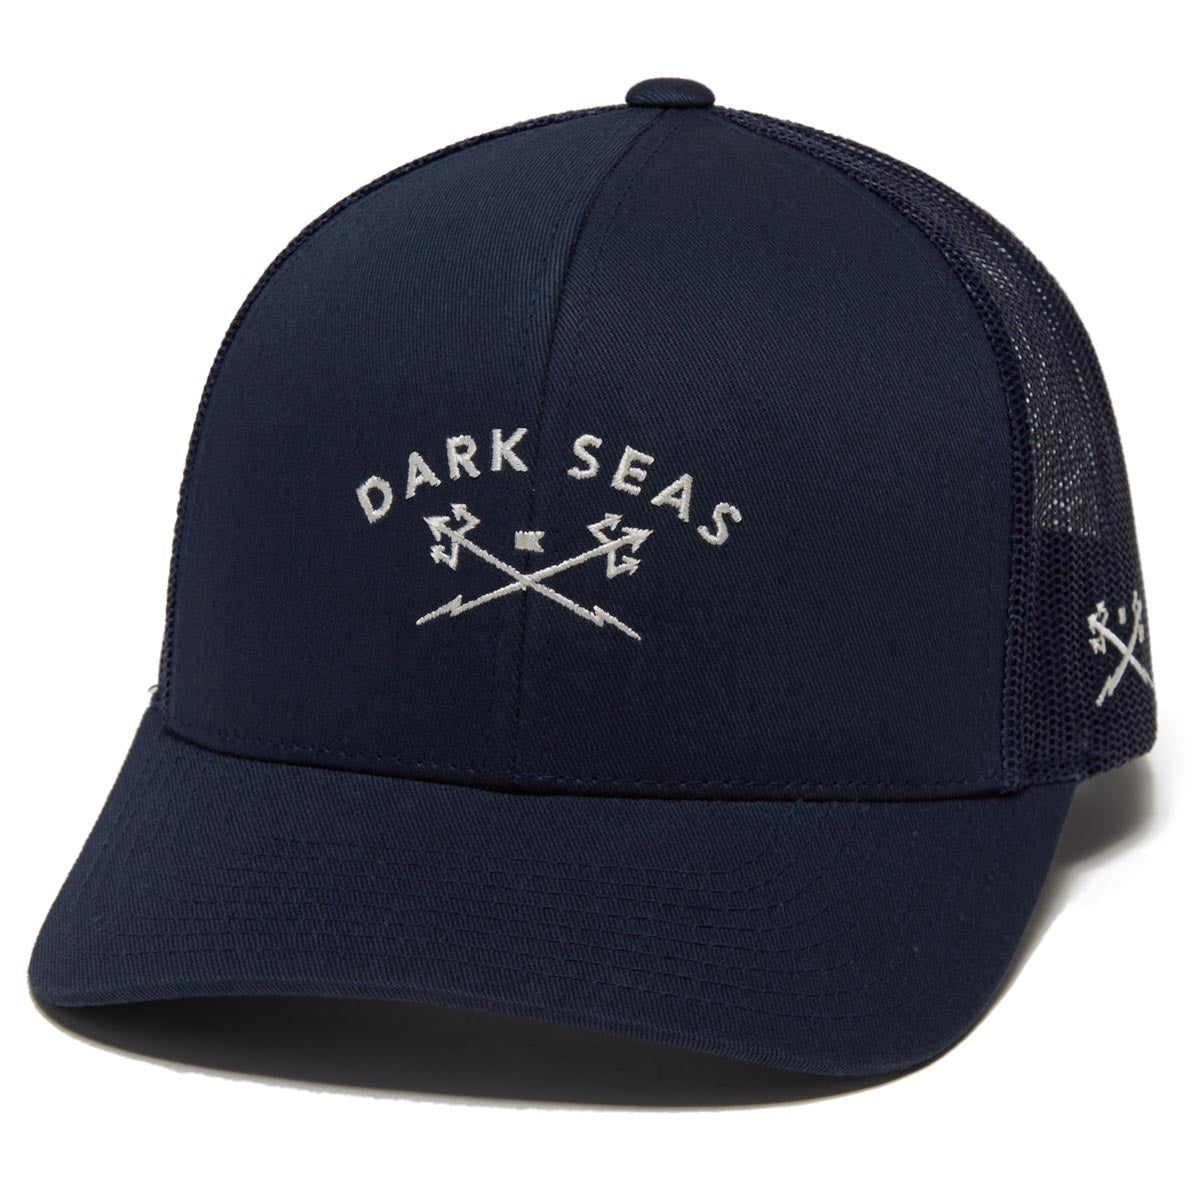 Dark Seas Murre Hat - Navy image 1